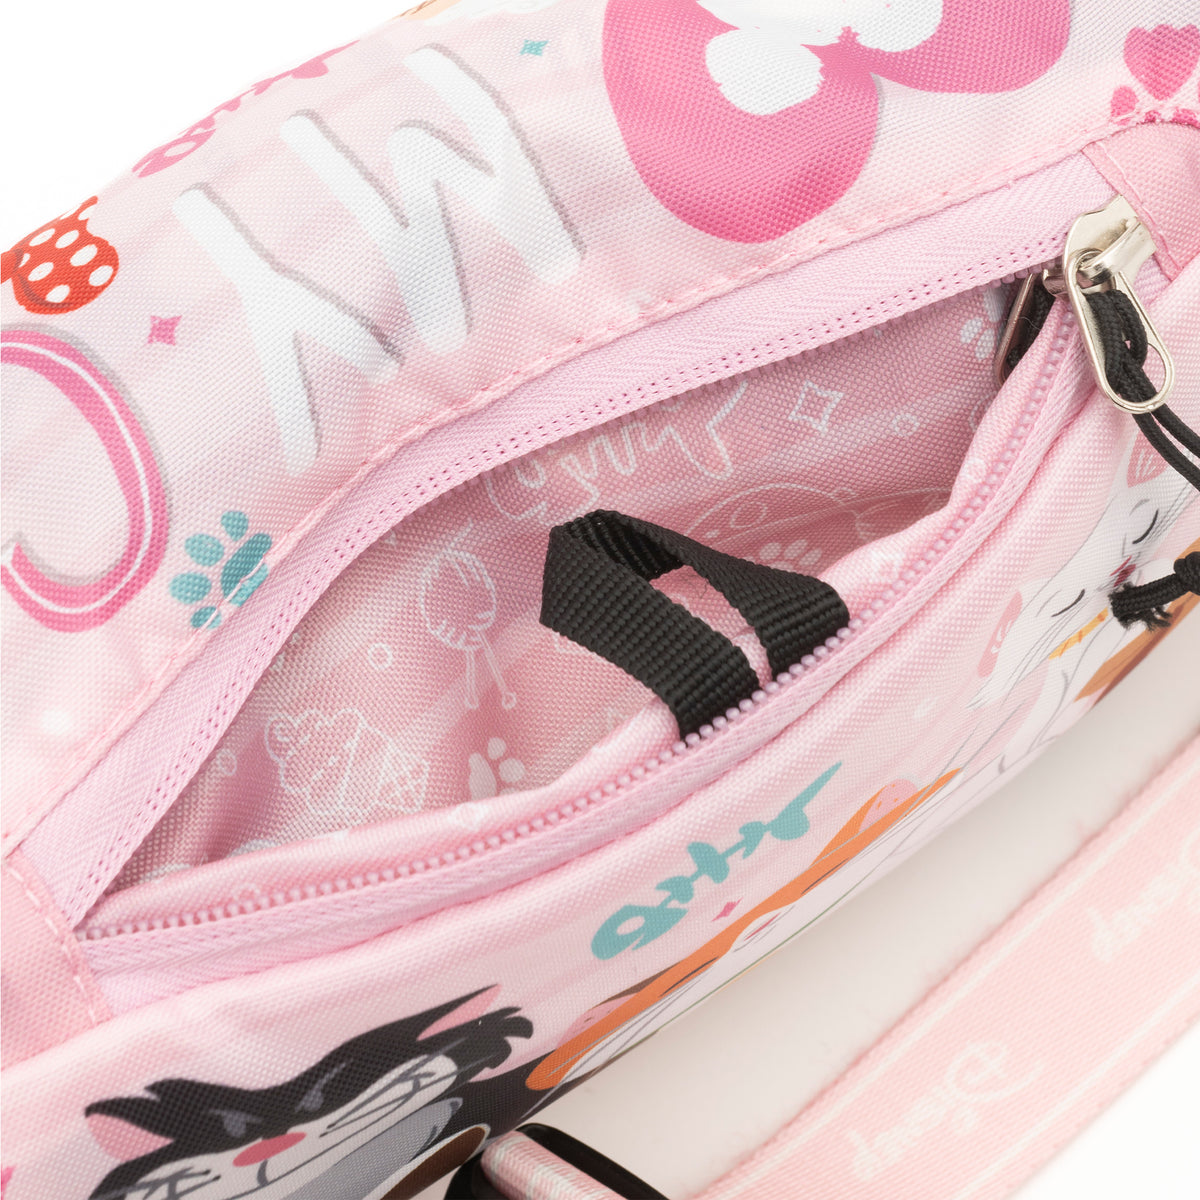 Disney Cats Packable Belt Bag